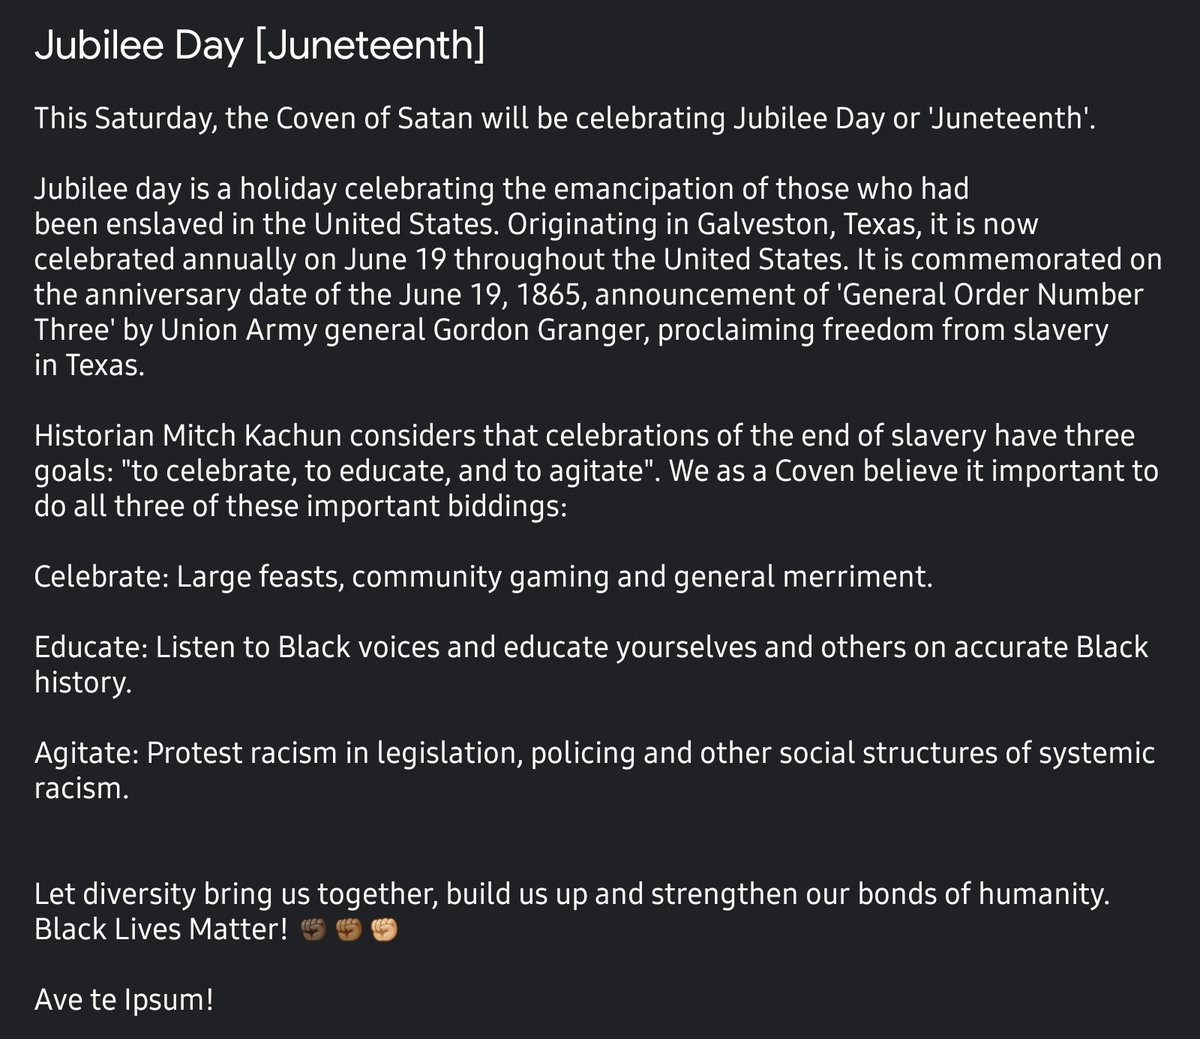 Hail Diversity!
#JuneTeenth2021 #JubileeDay #BlackLivesMatter